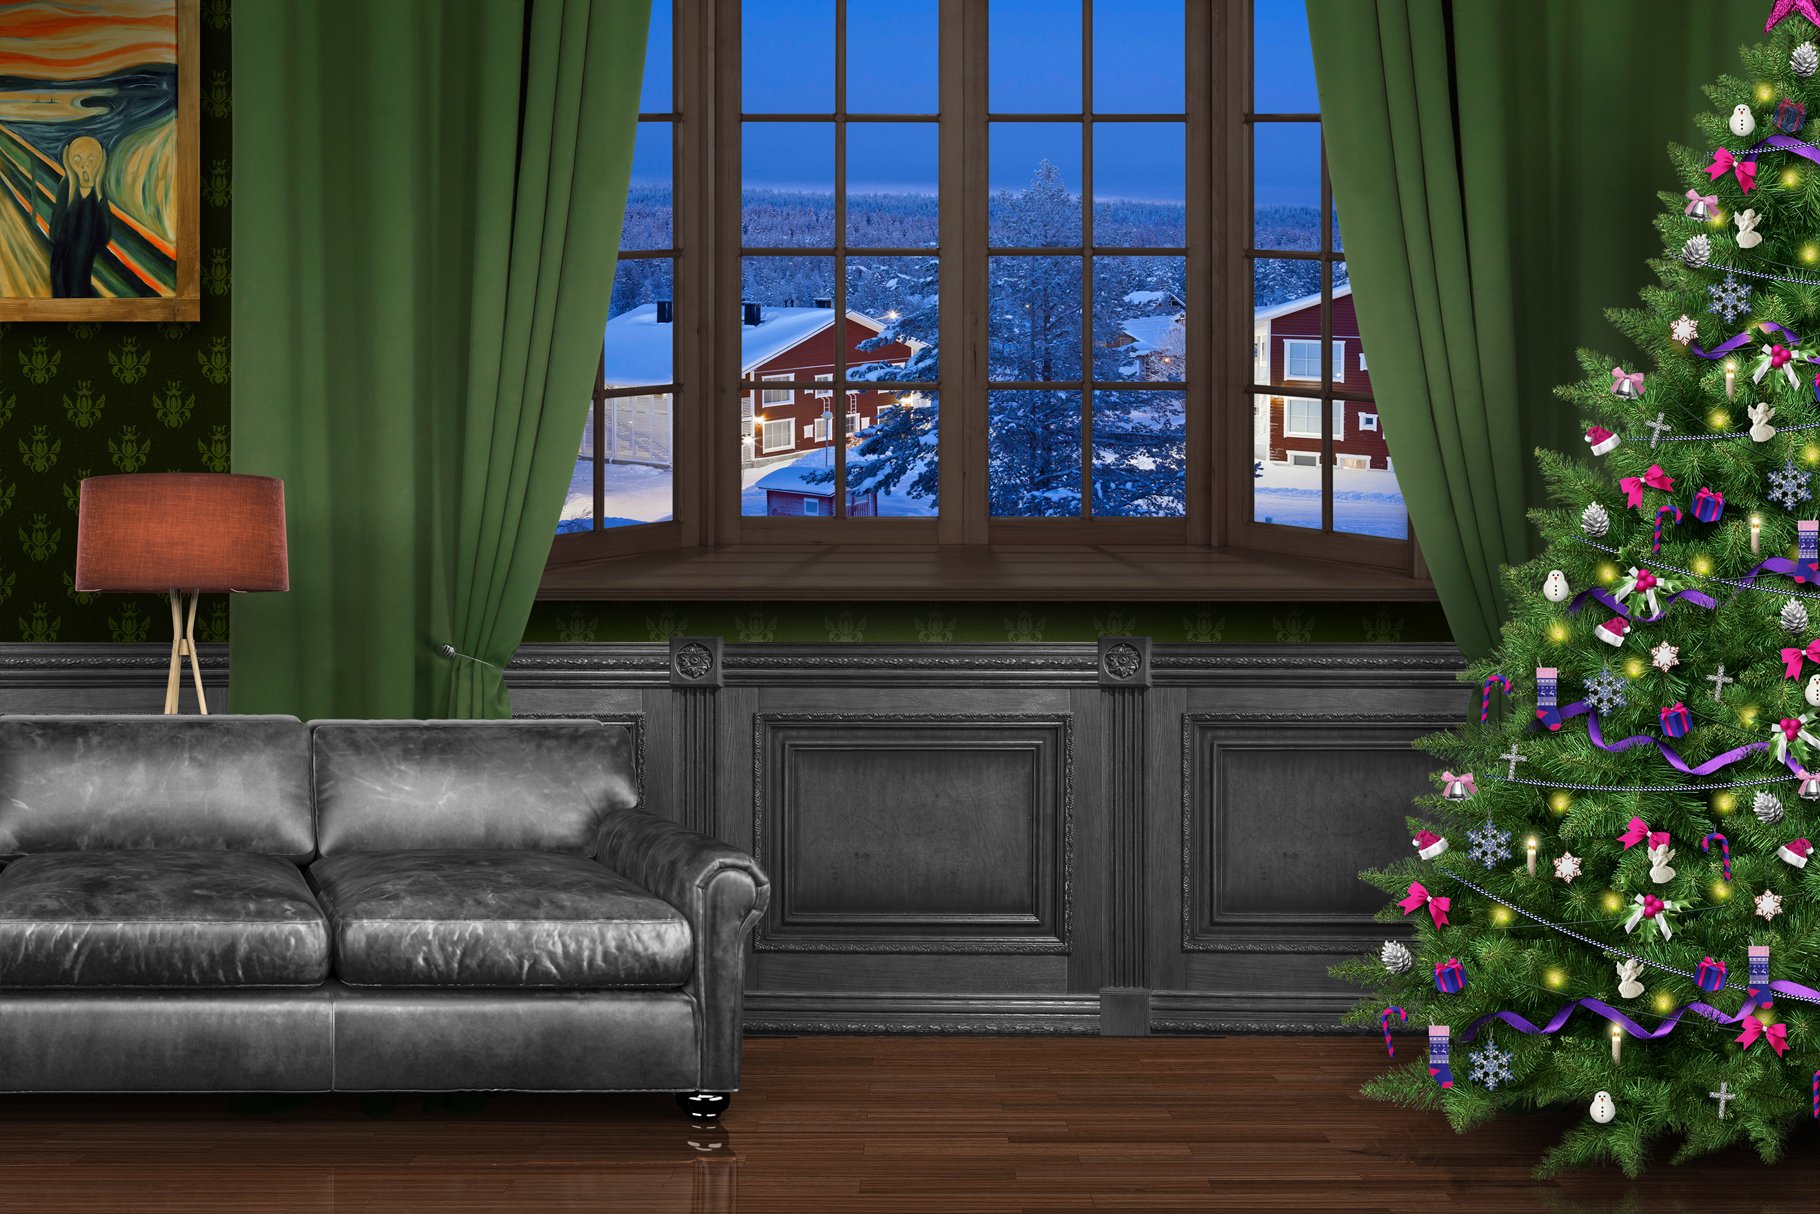 Christmas interior scene creator cover image.